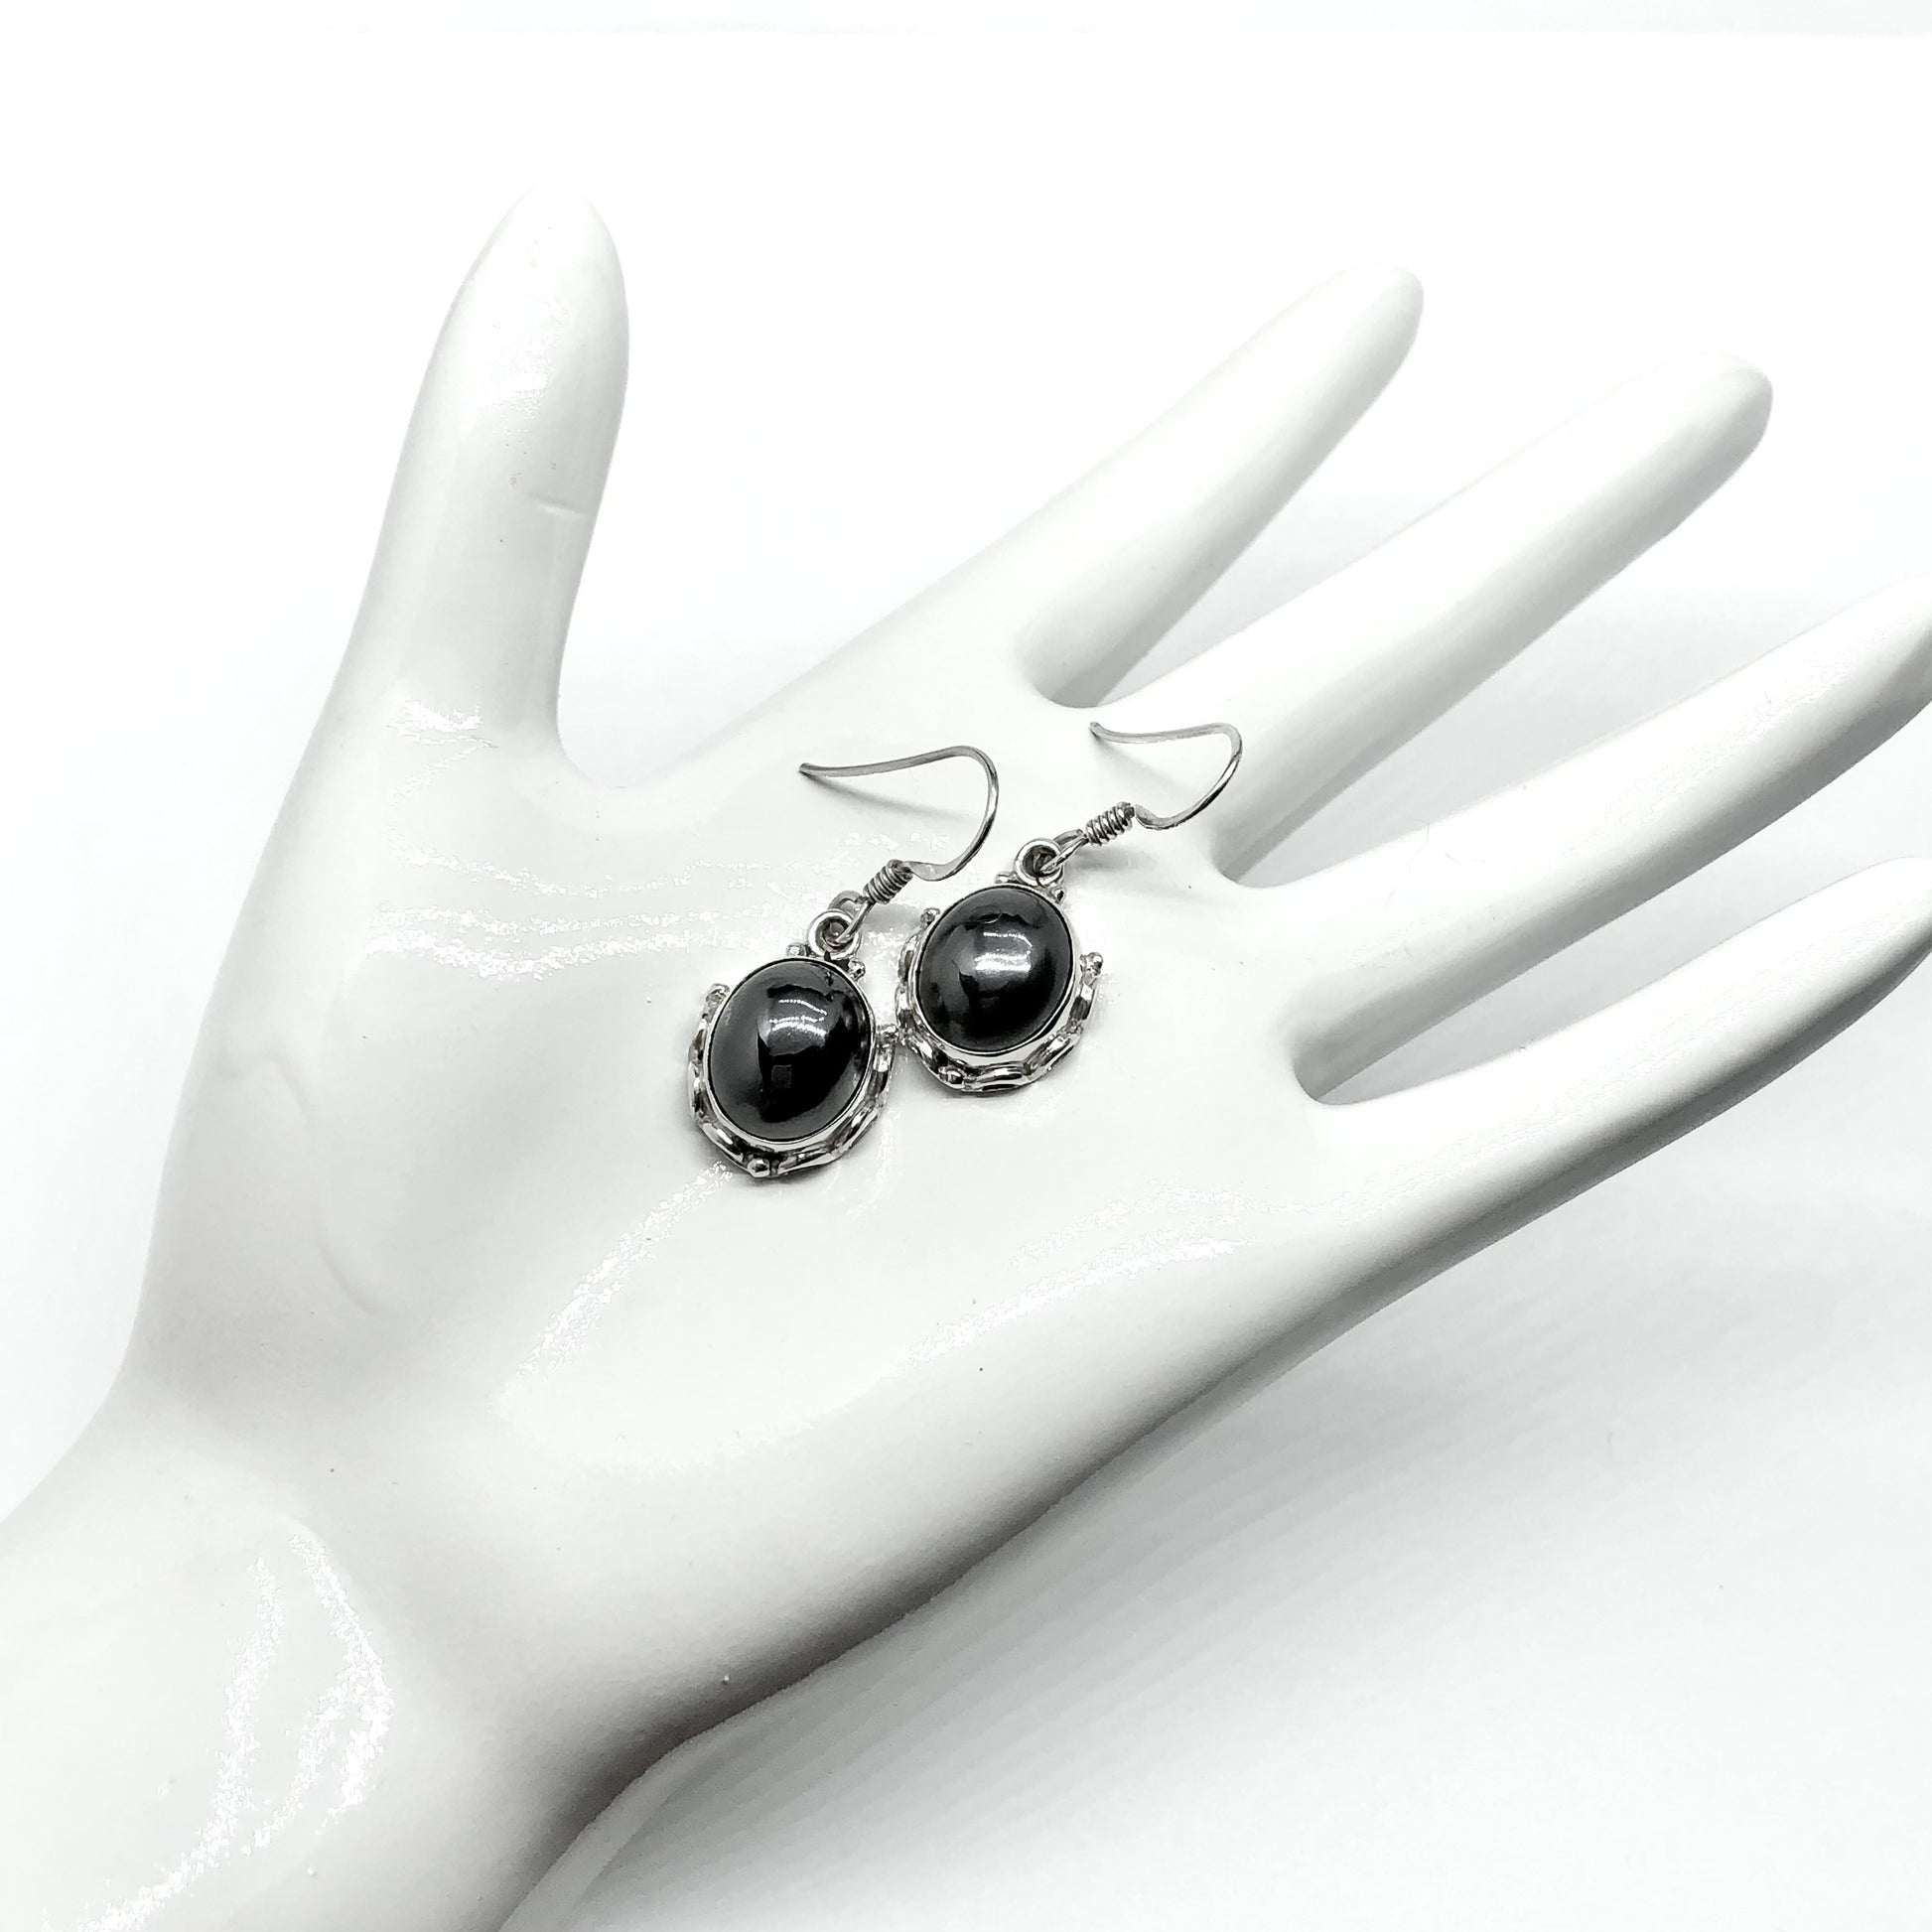 Jewelry - 925 Sterling Silver Black Metallic Sheen Hematite Stone Dangle Earrings - Blingschlingers.com USA